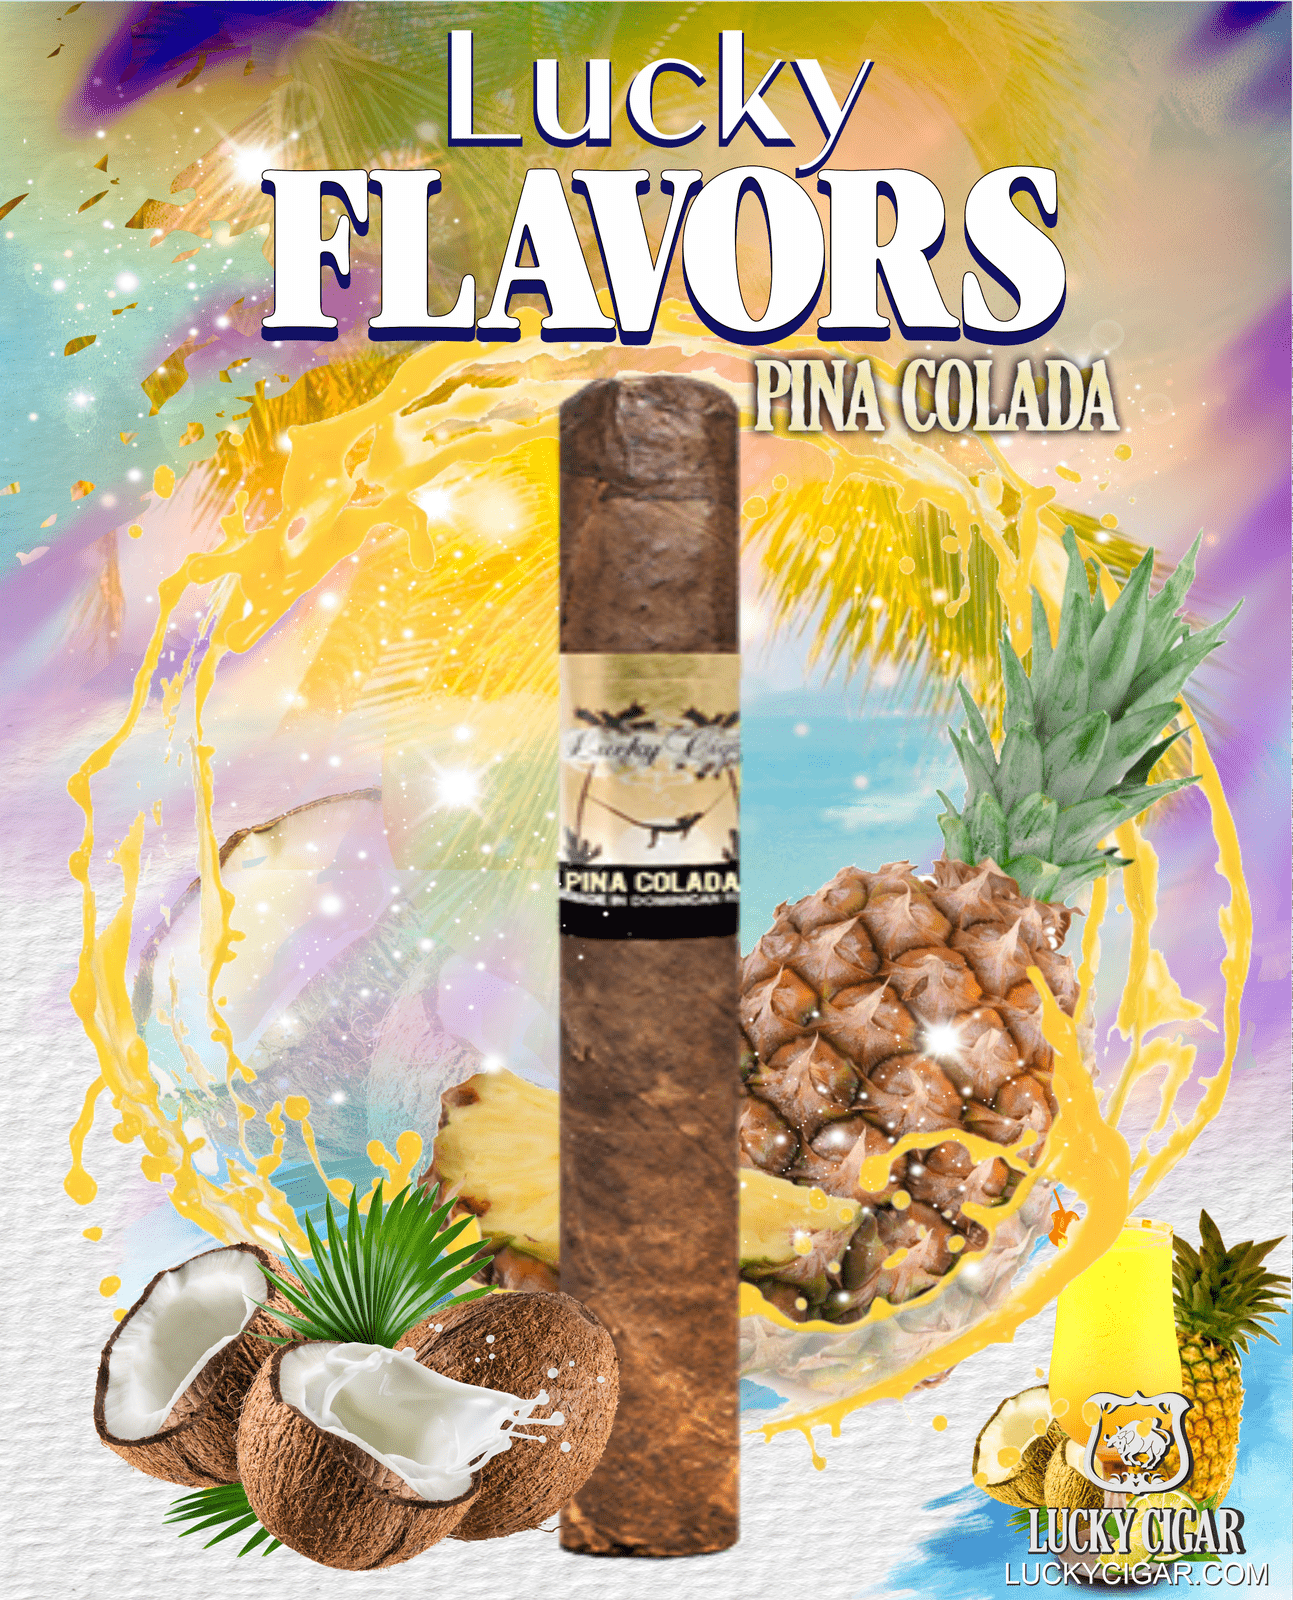 Flavored Cigars: Lucky Flavors Pina Colada 5x42 Cigar